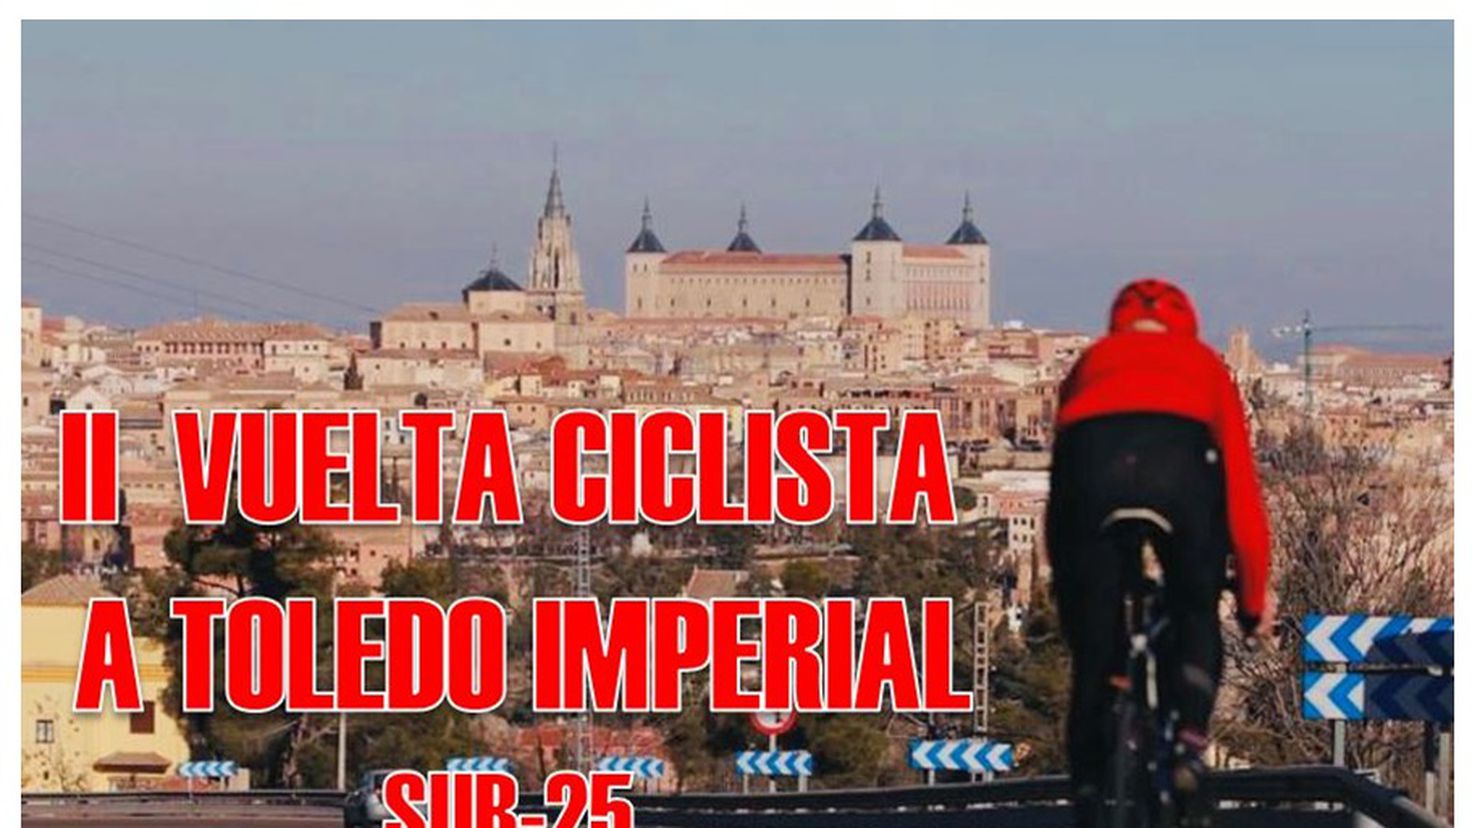 The II Tour of Toledo Imperial invites the elite of the amateur peloton
